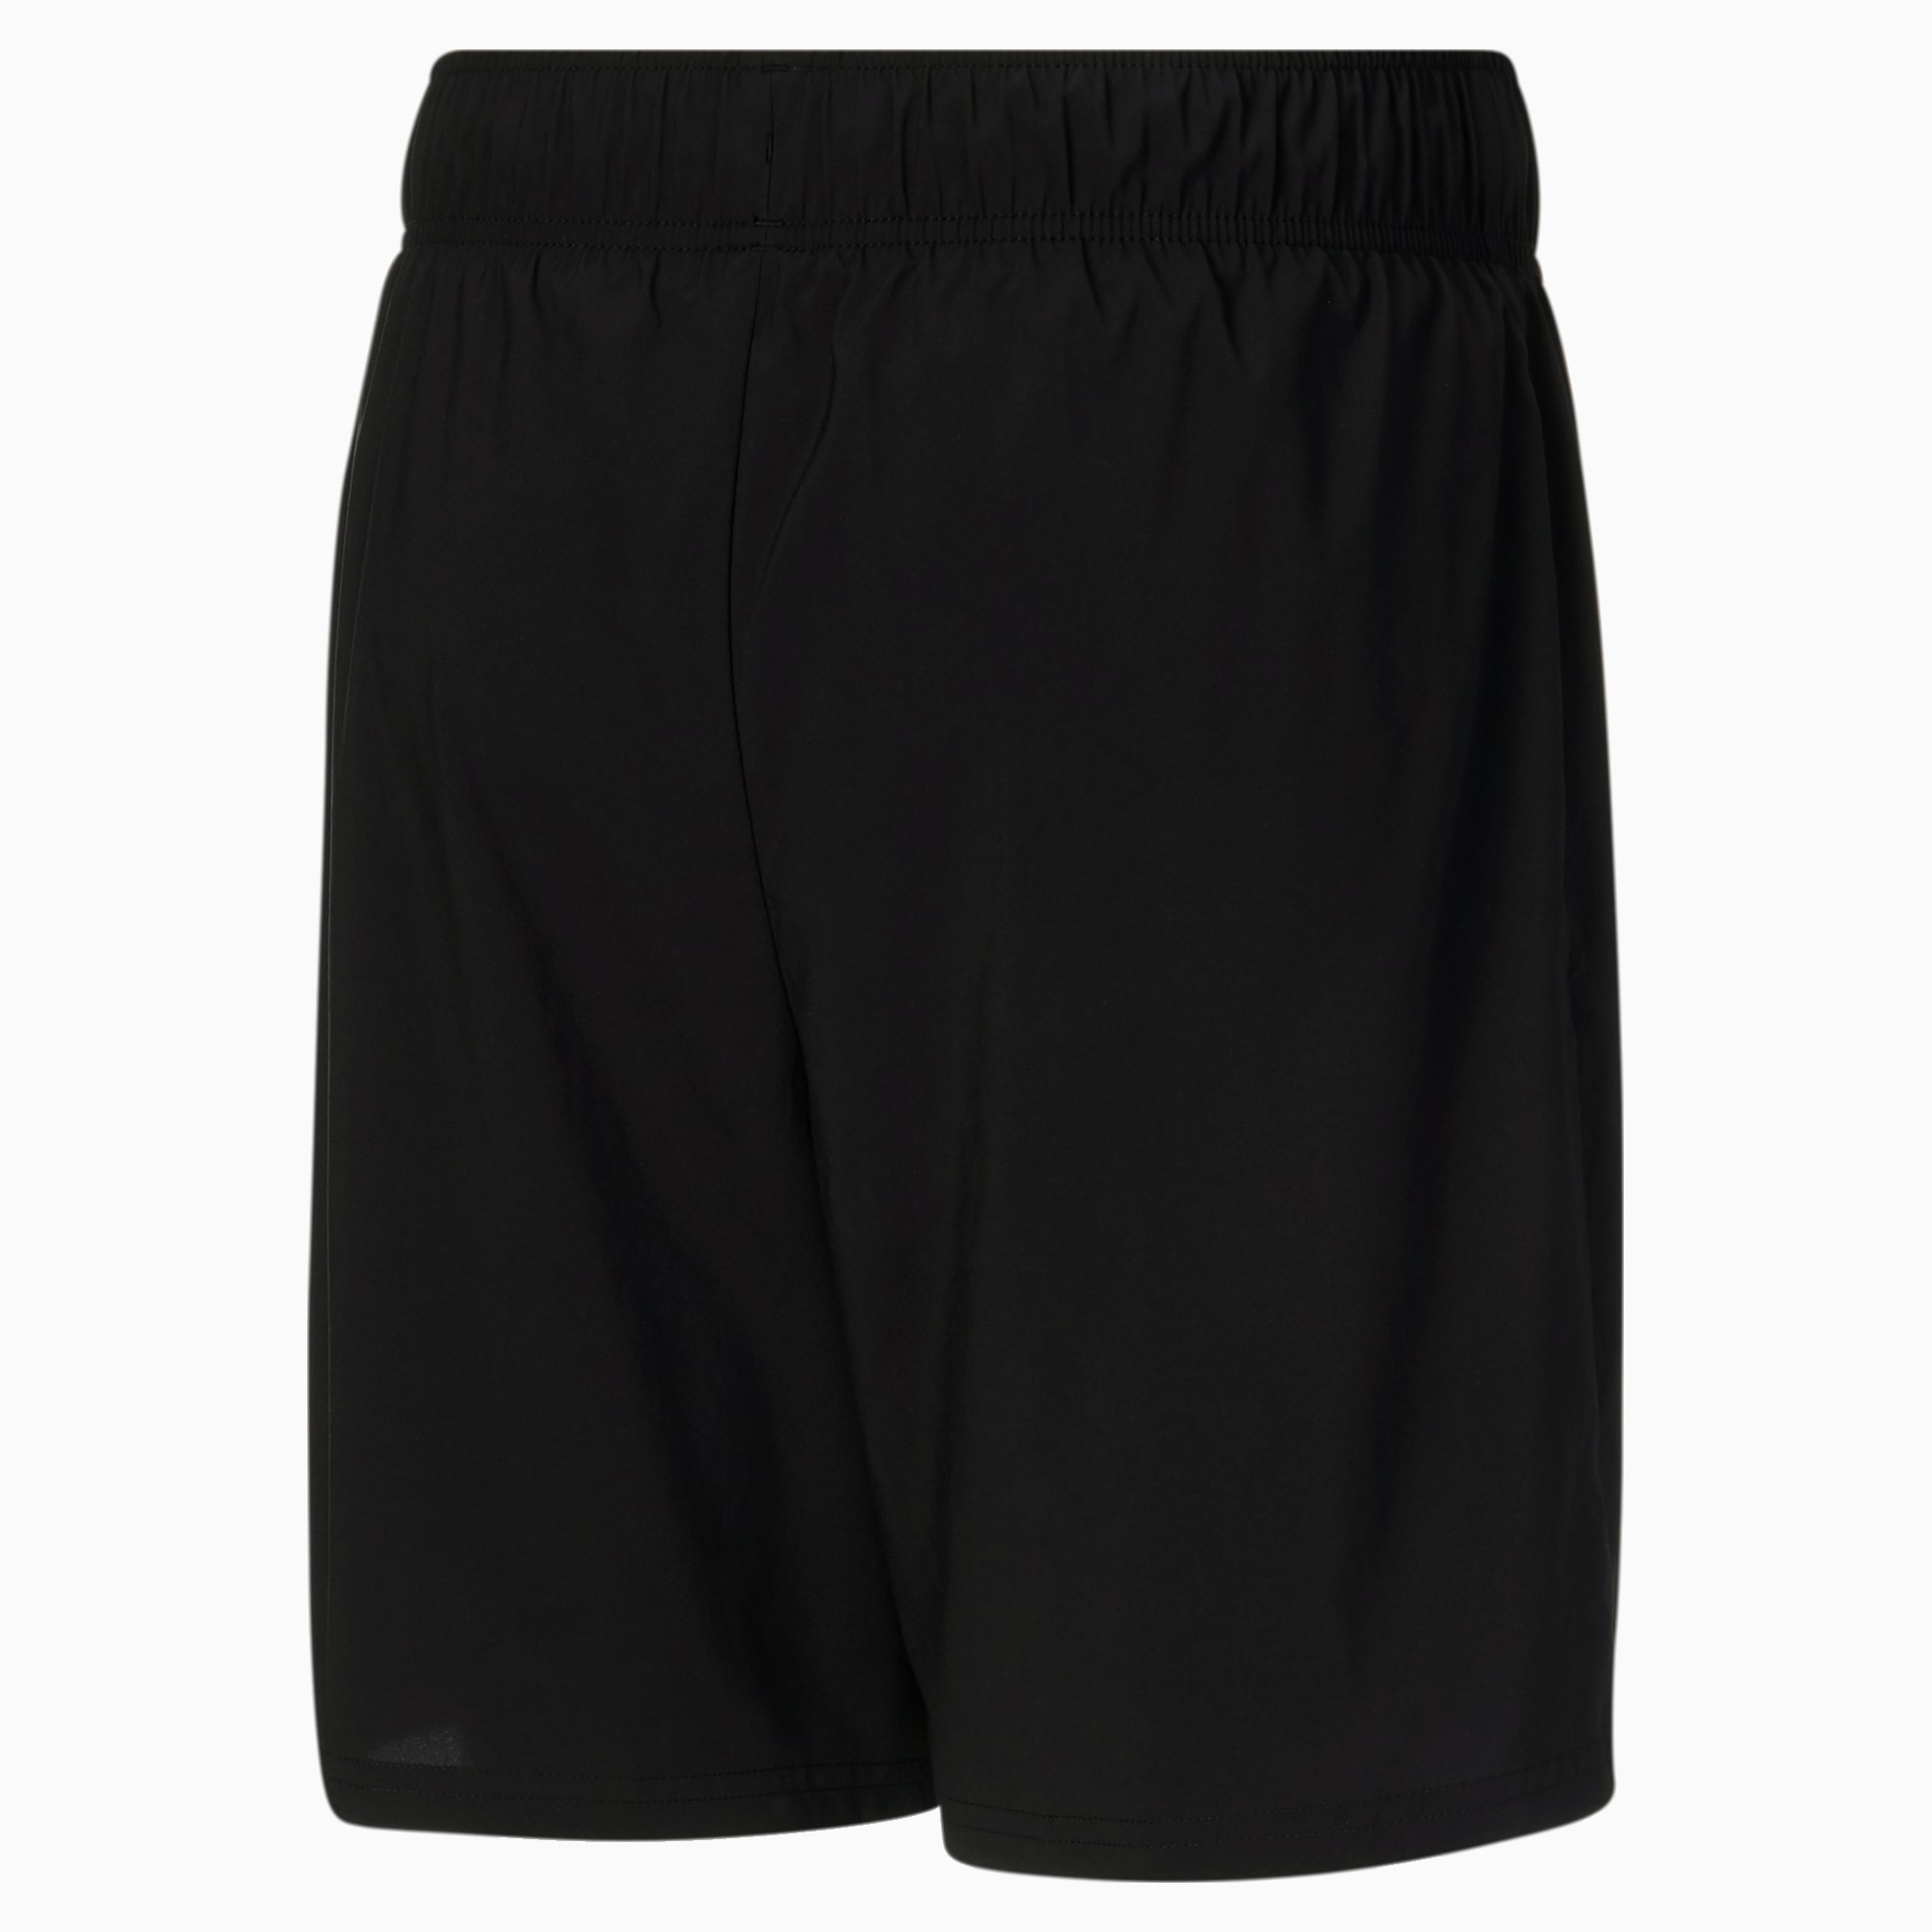 PUMA Favourite 2-in-1 Men's Running Shorts, Black, Size XS, Clothing